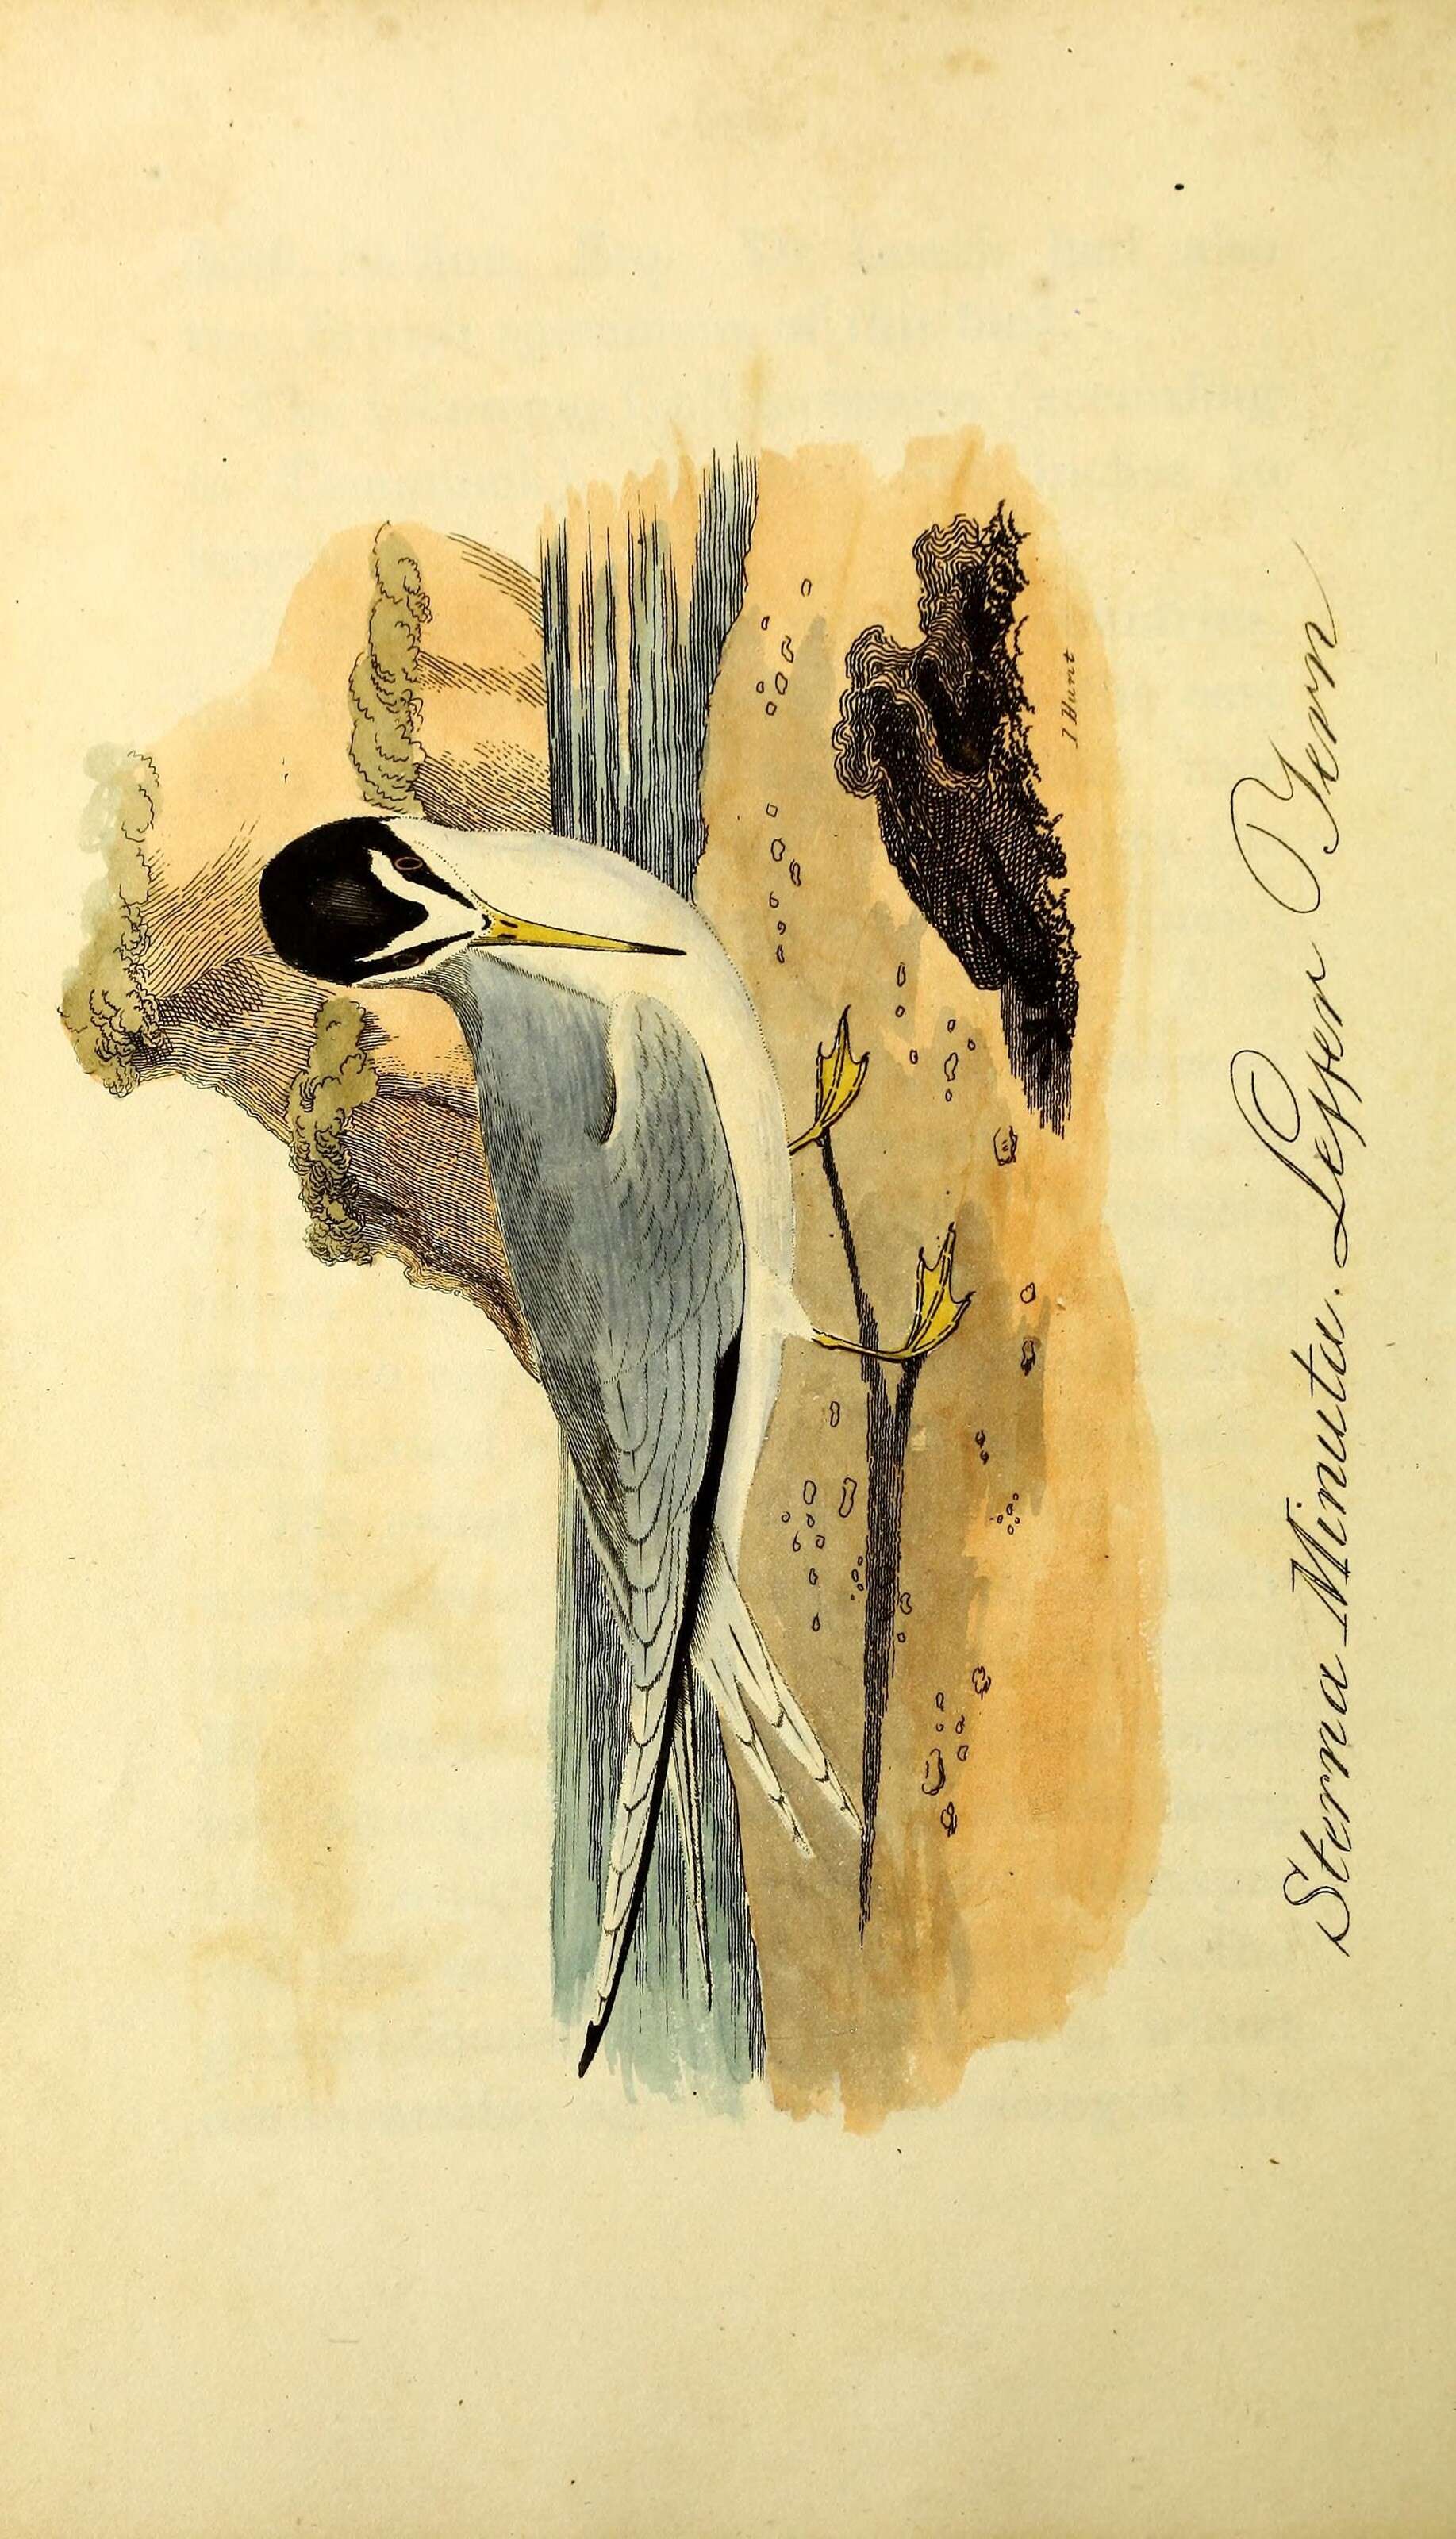 Image of Little Tern